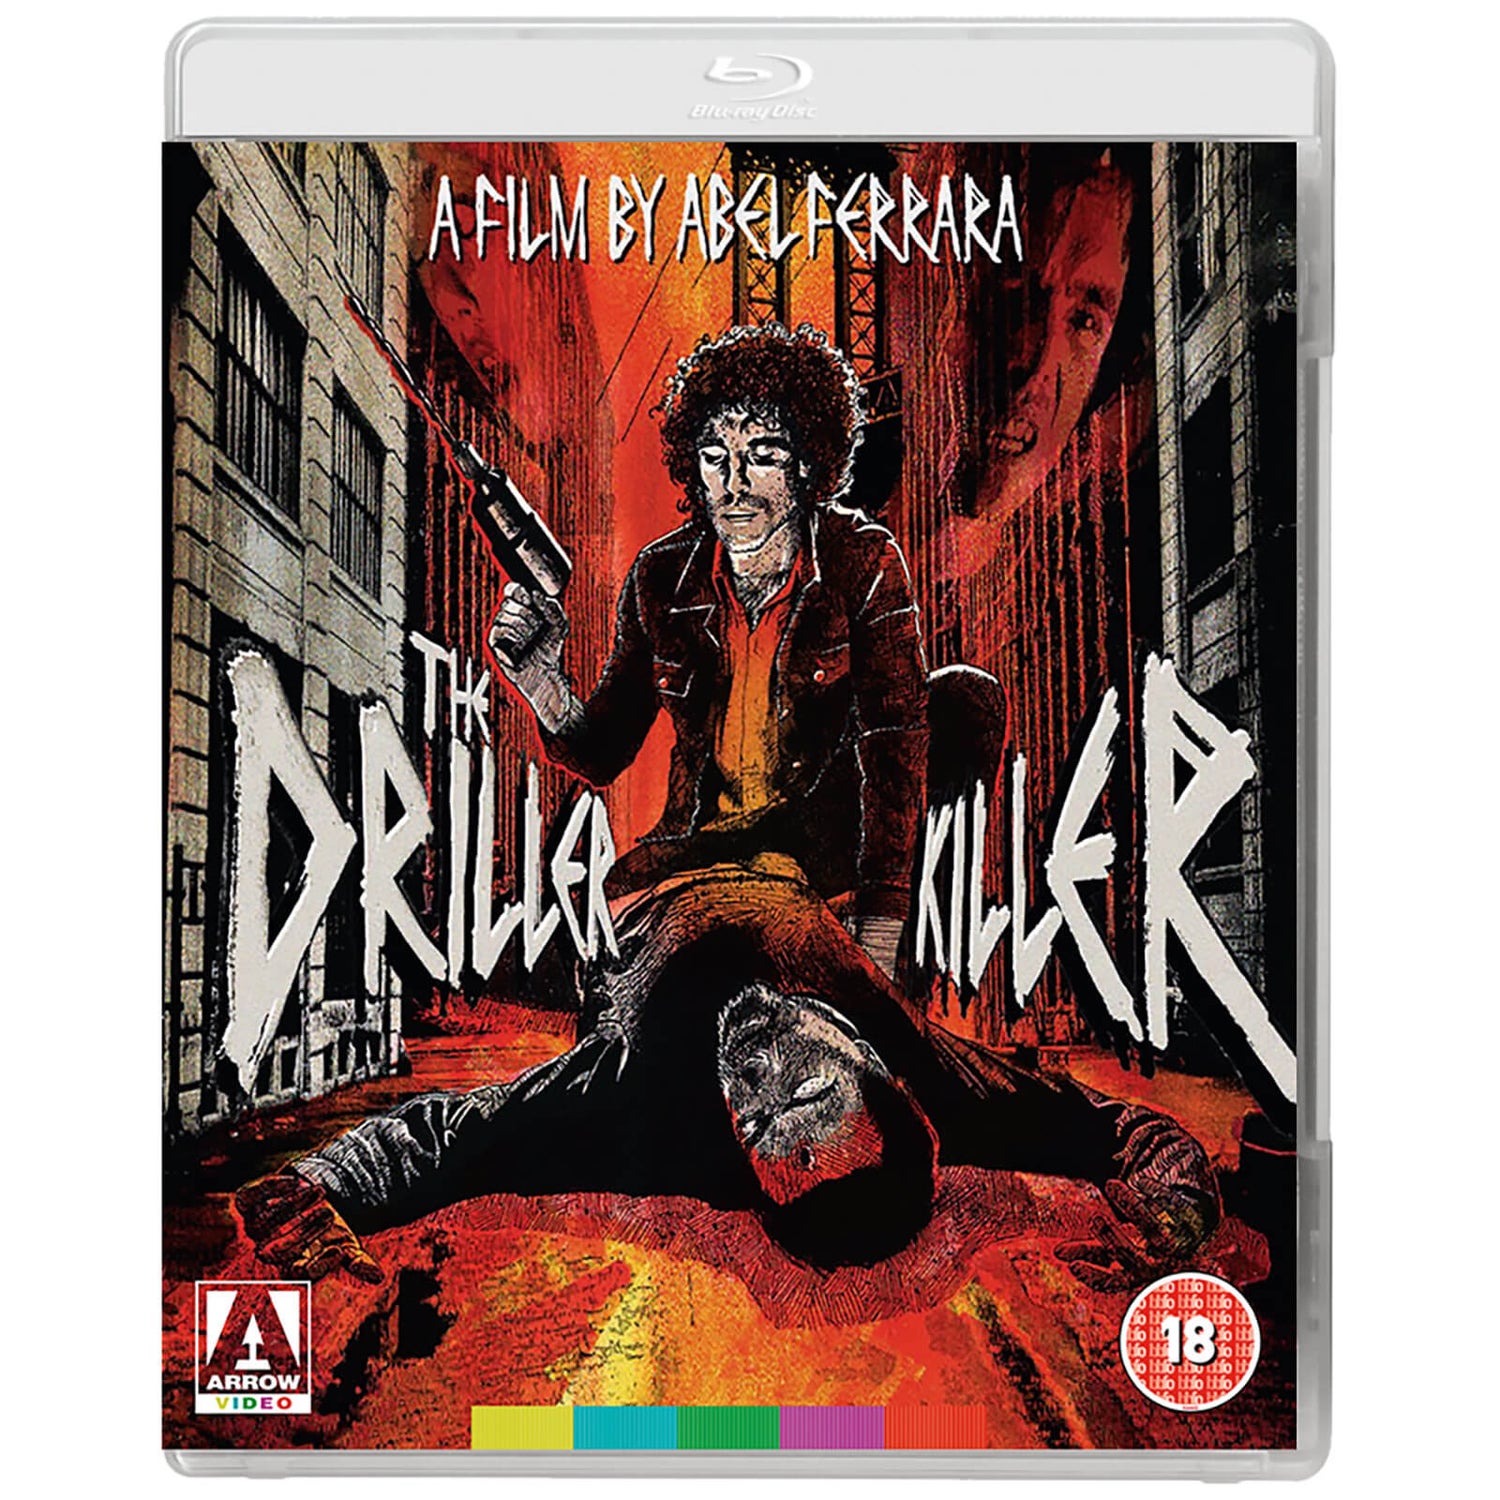 The Driller Killer - Doppelformat (inklusive DVD)